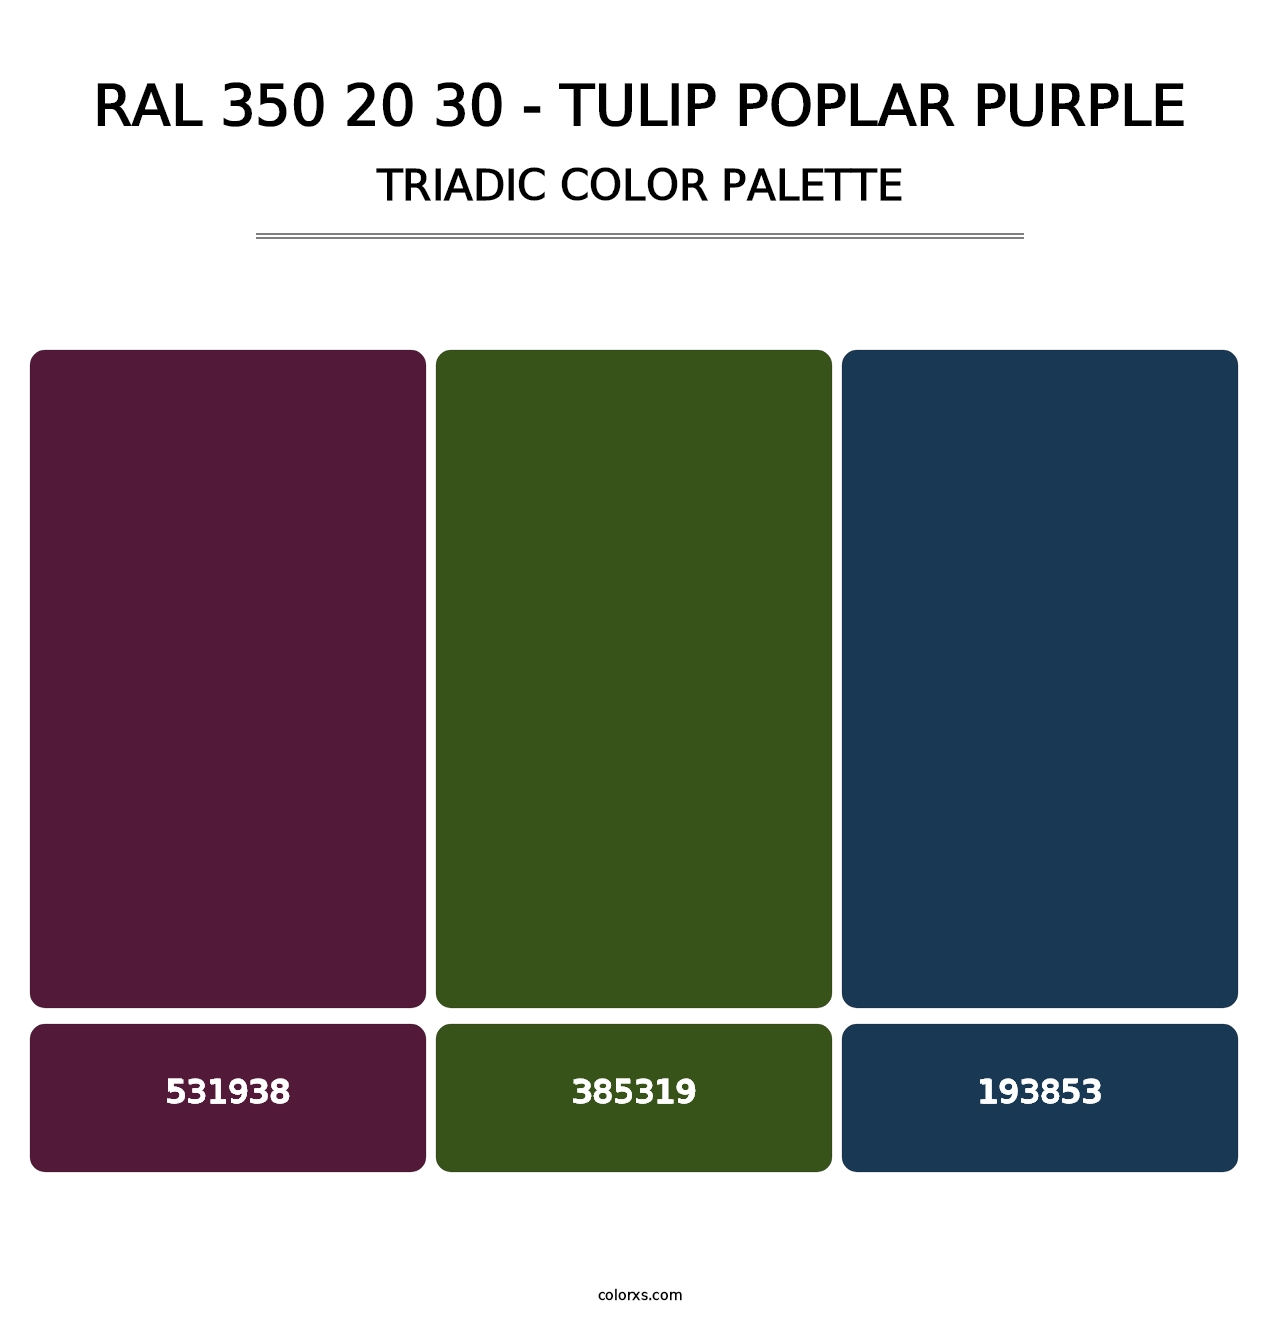 RAL 350 20 30 - Tulip Poplar Purple - Triadic Color Palette